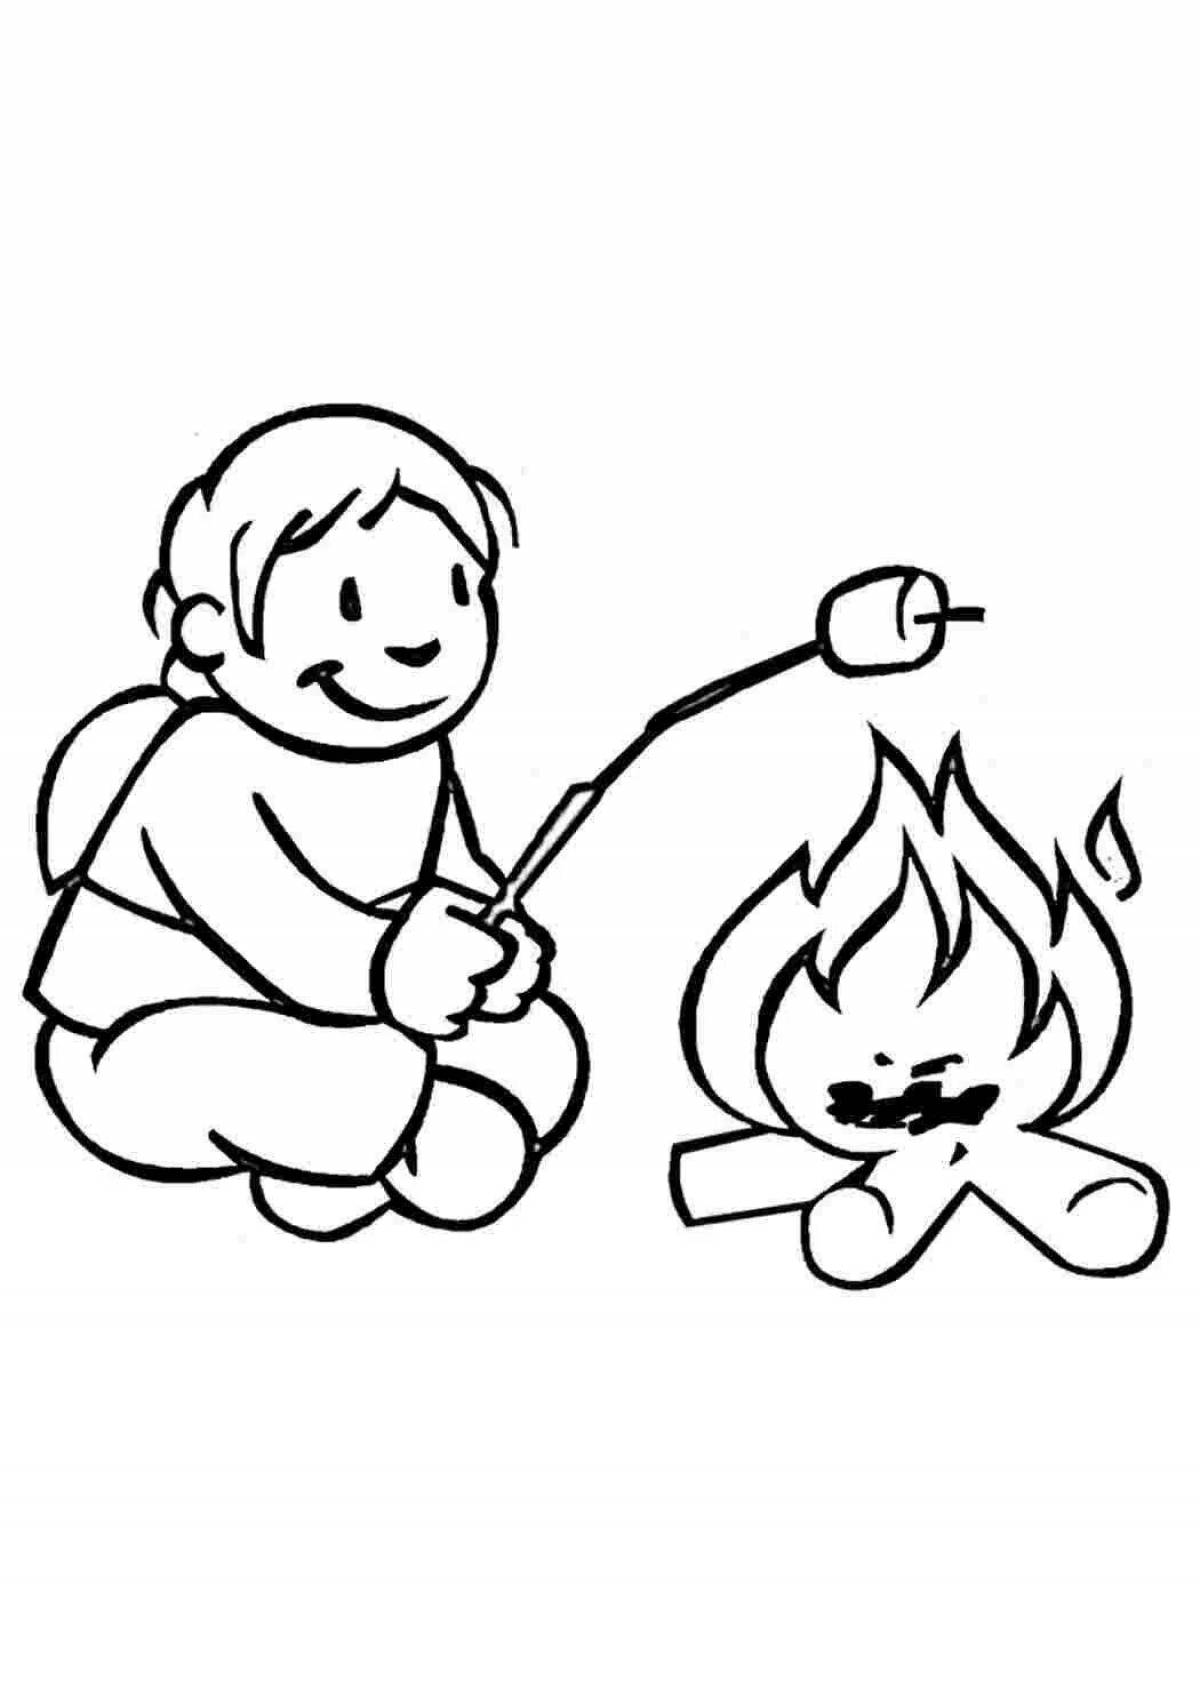 Rampant bonfire coloring pages for kids